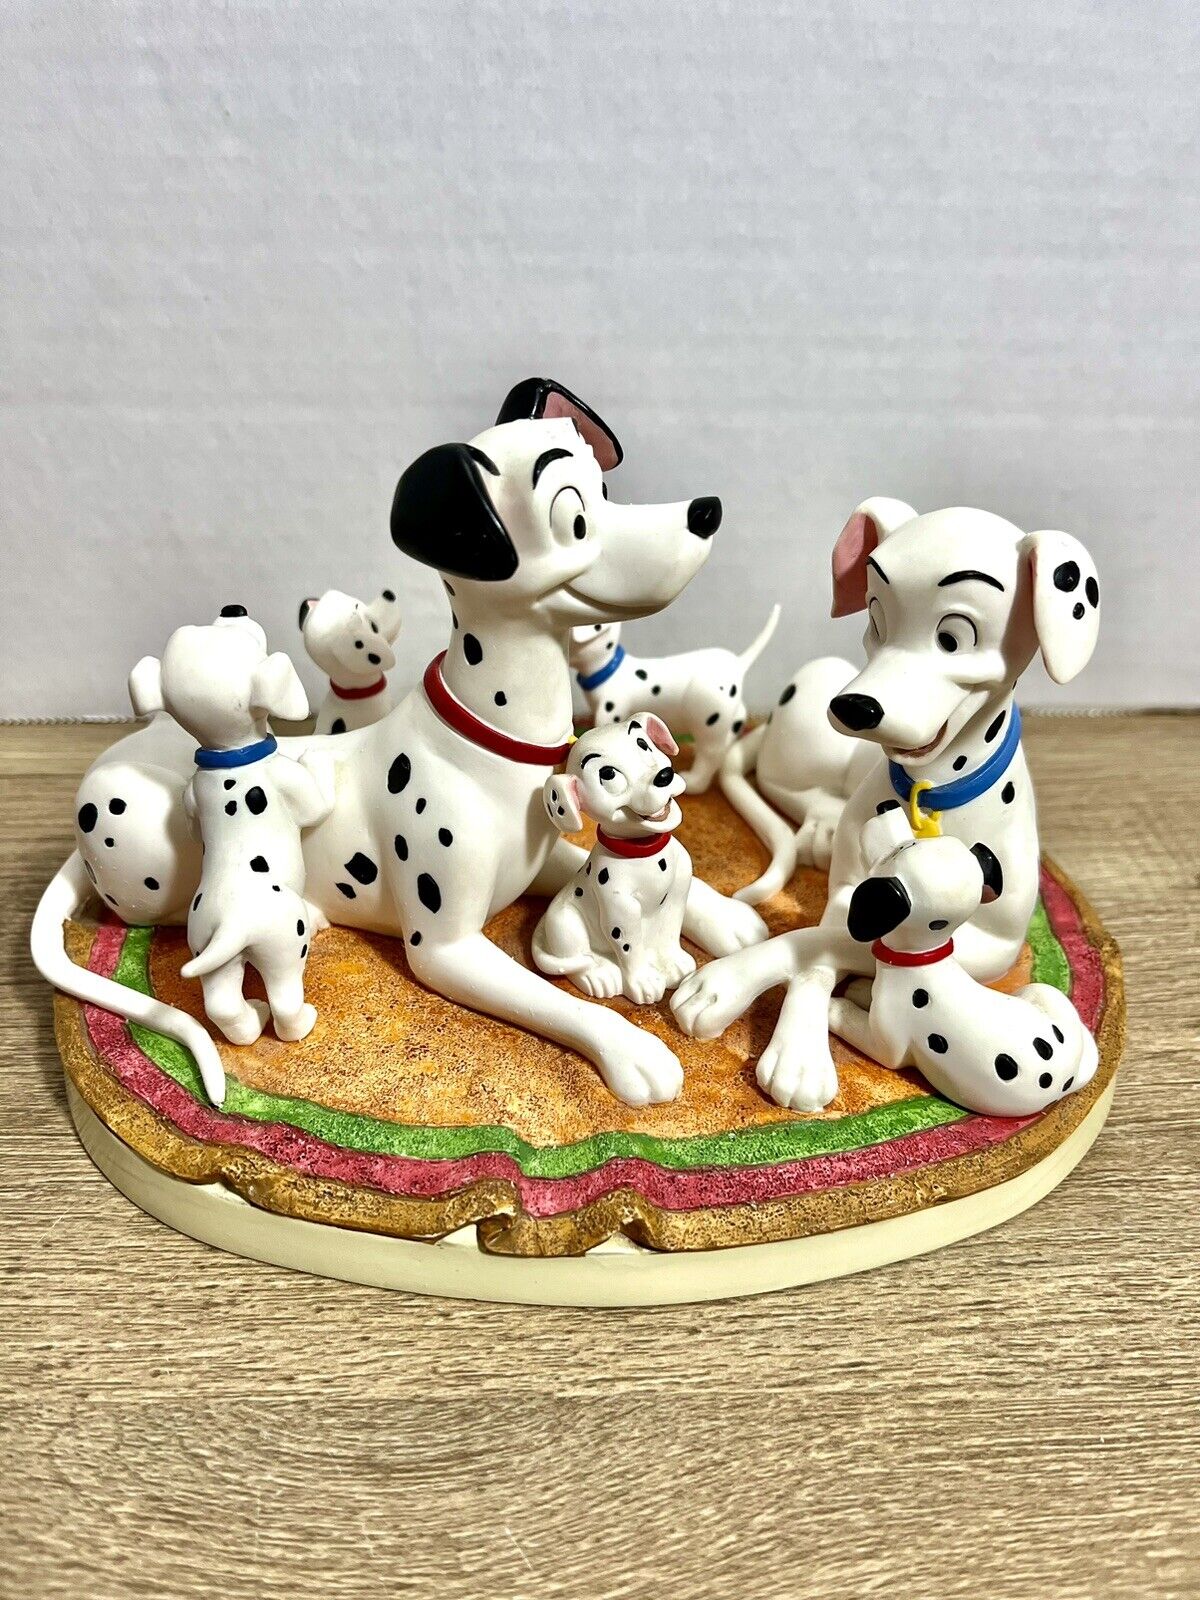 Disneys Animated Classics 101 Dalmatians Figurine Awesomeness Rare Find